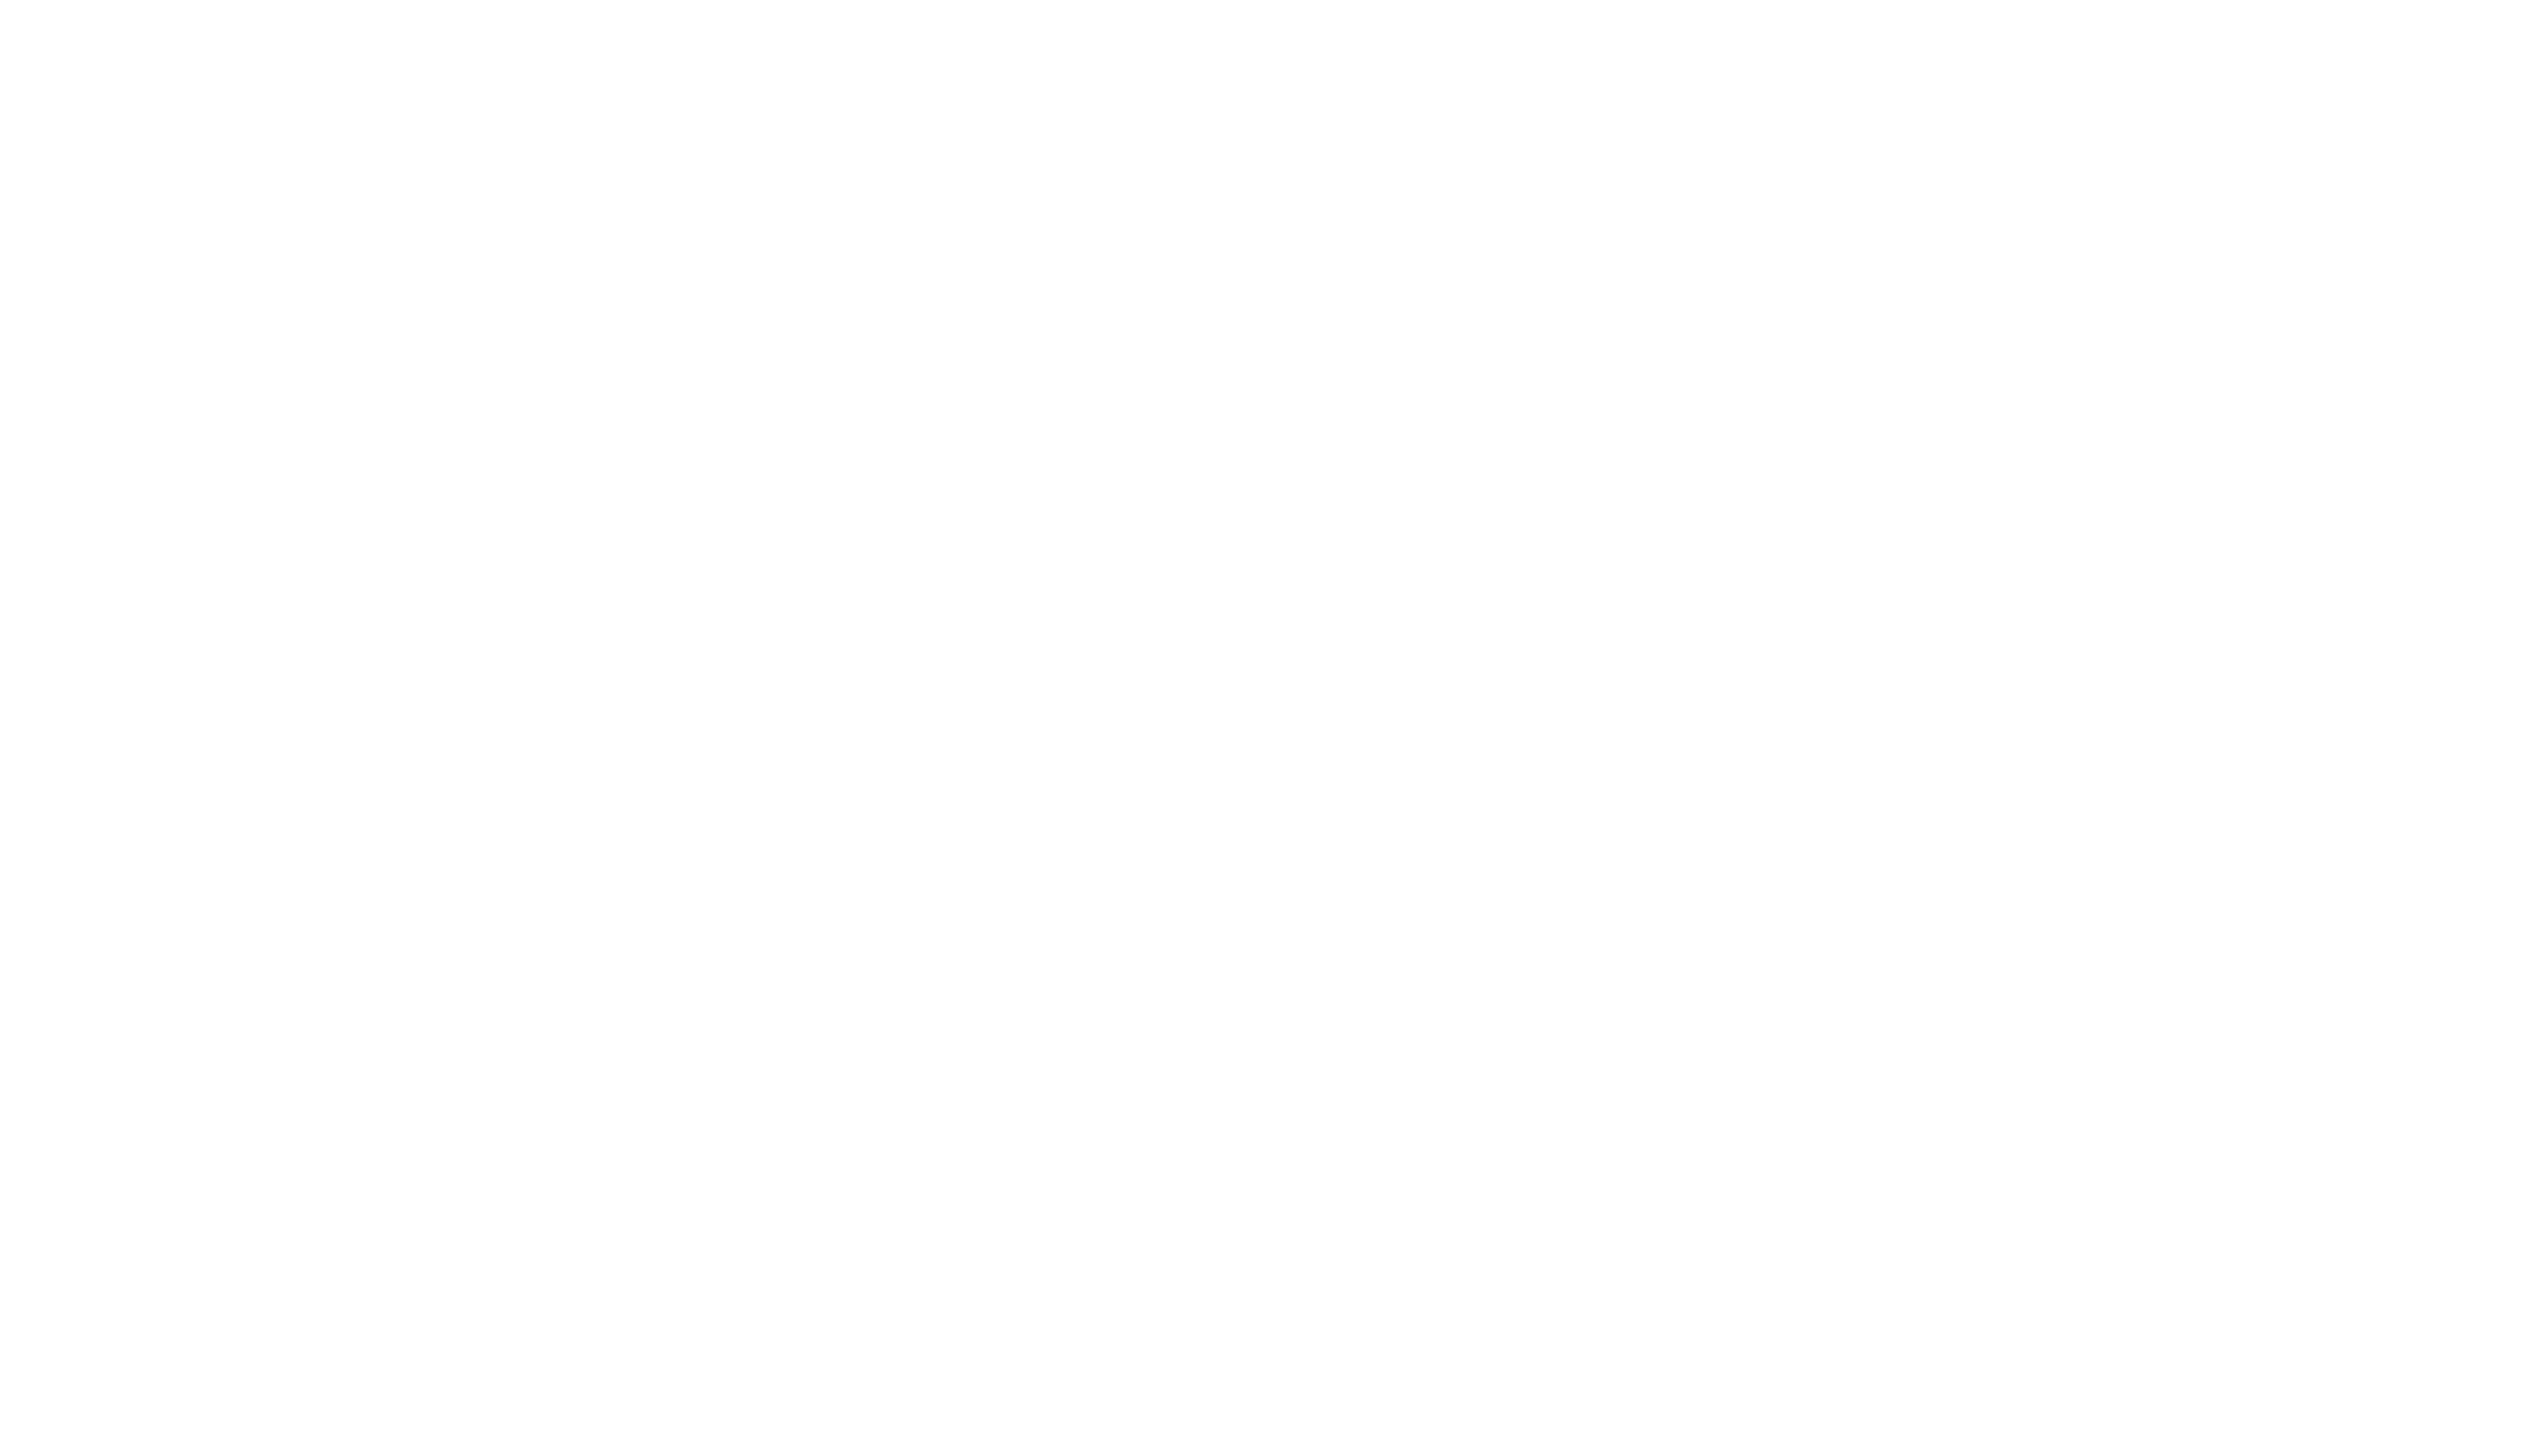 Street Light Productions Logo